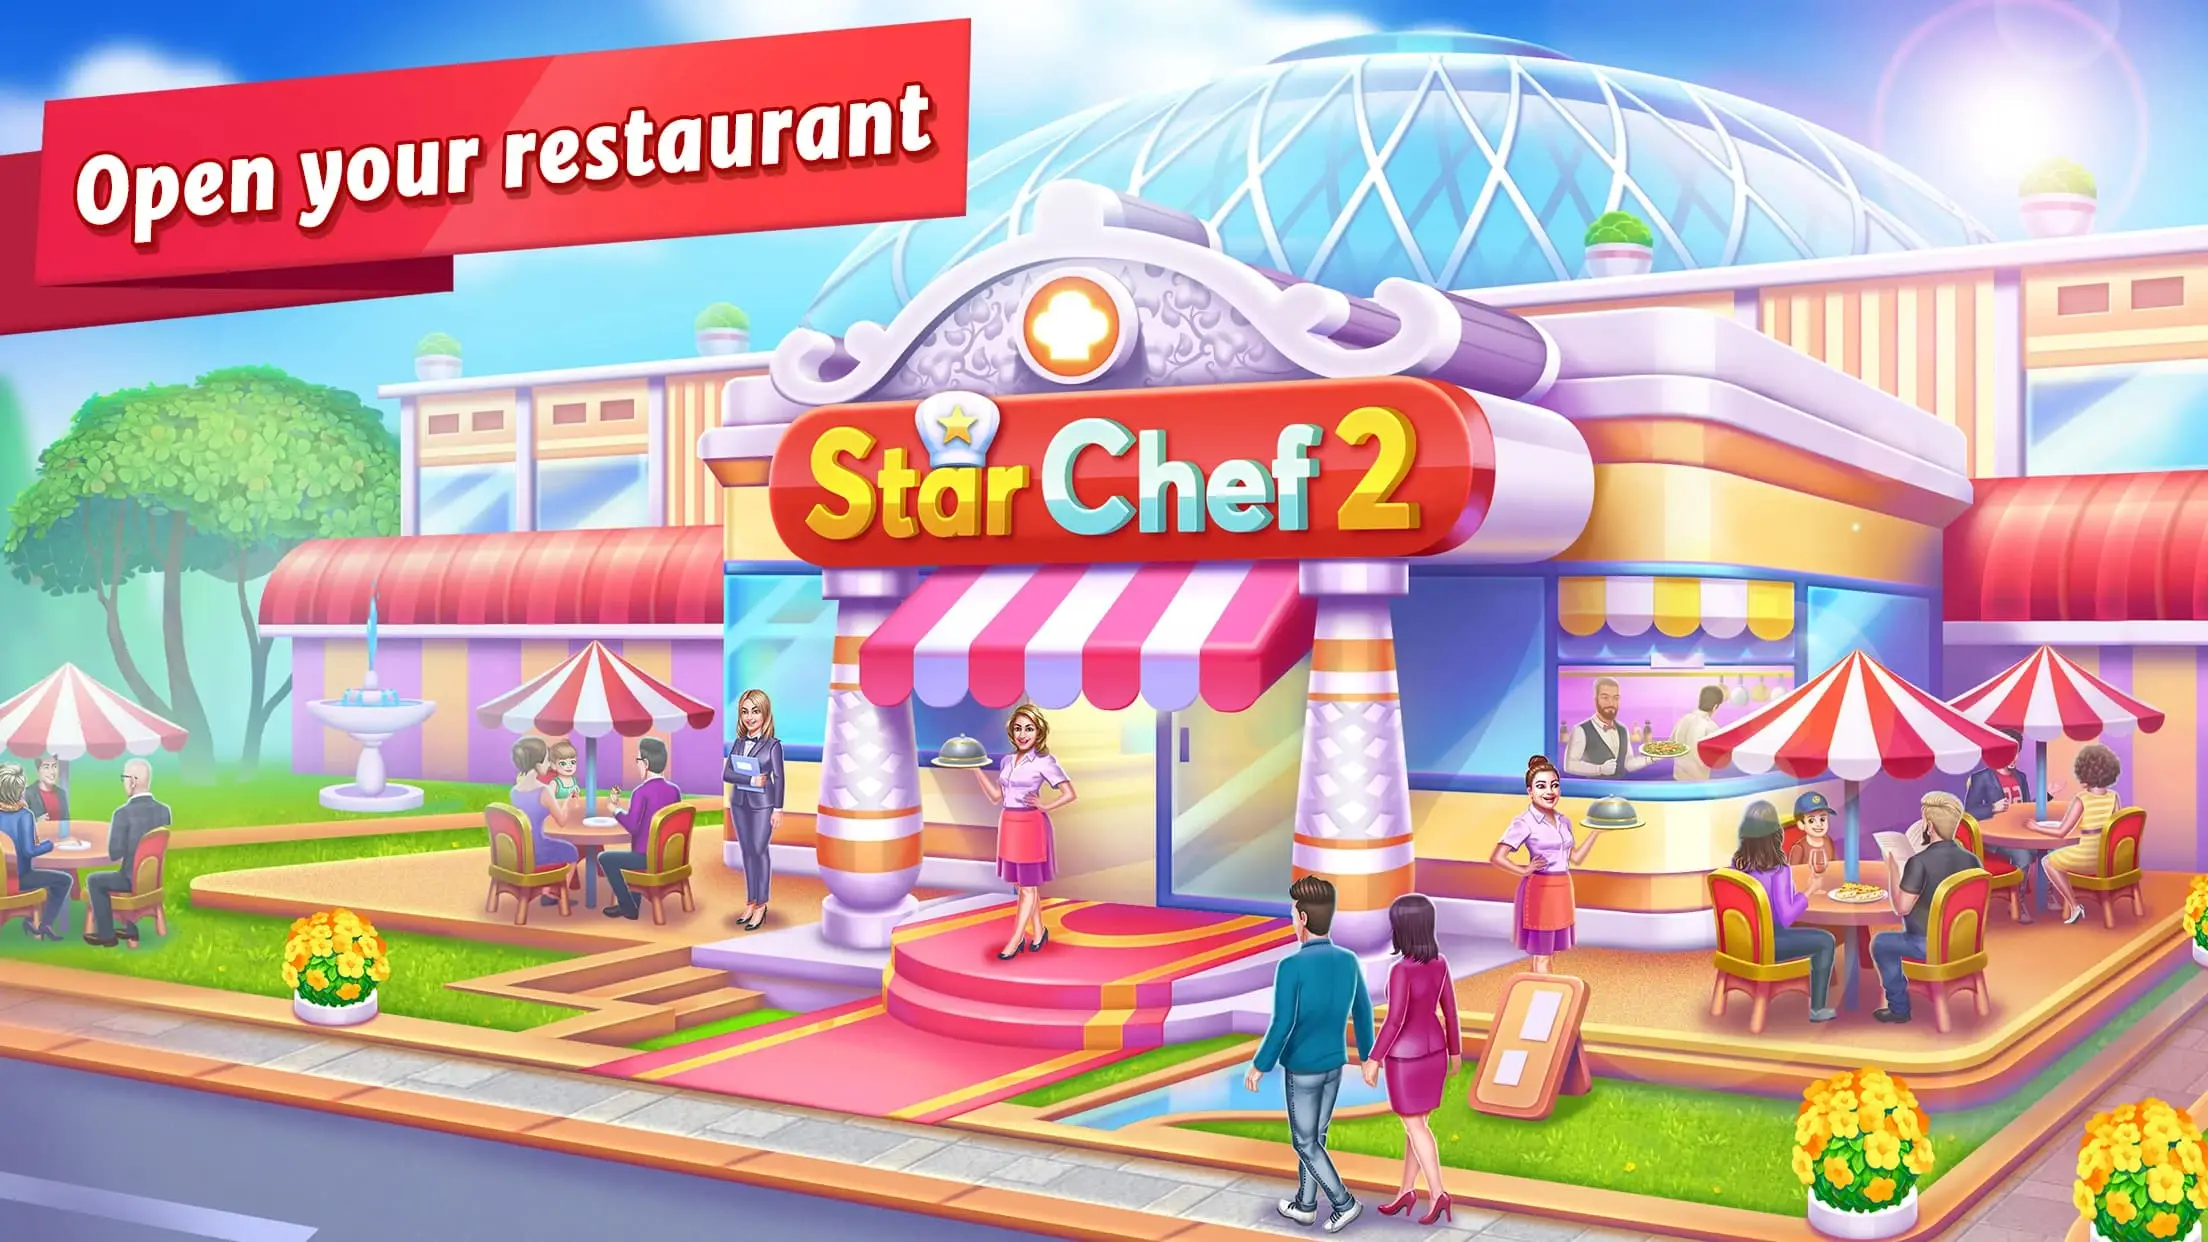 Giới thiệu game Star Chef 2